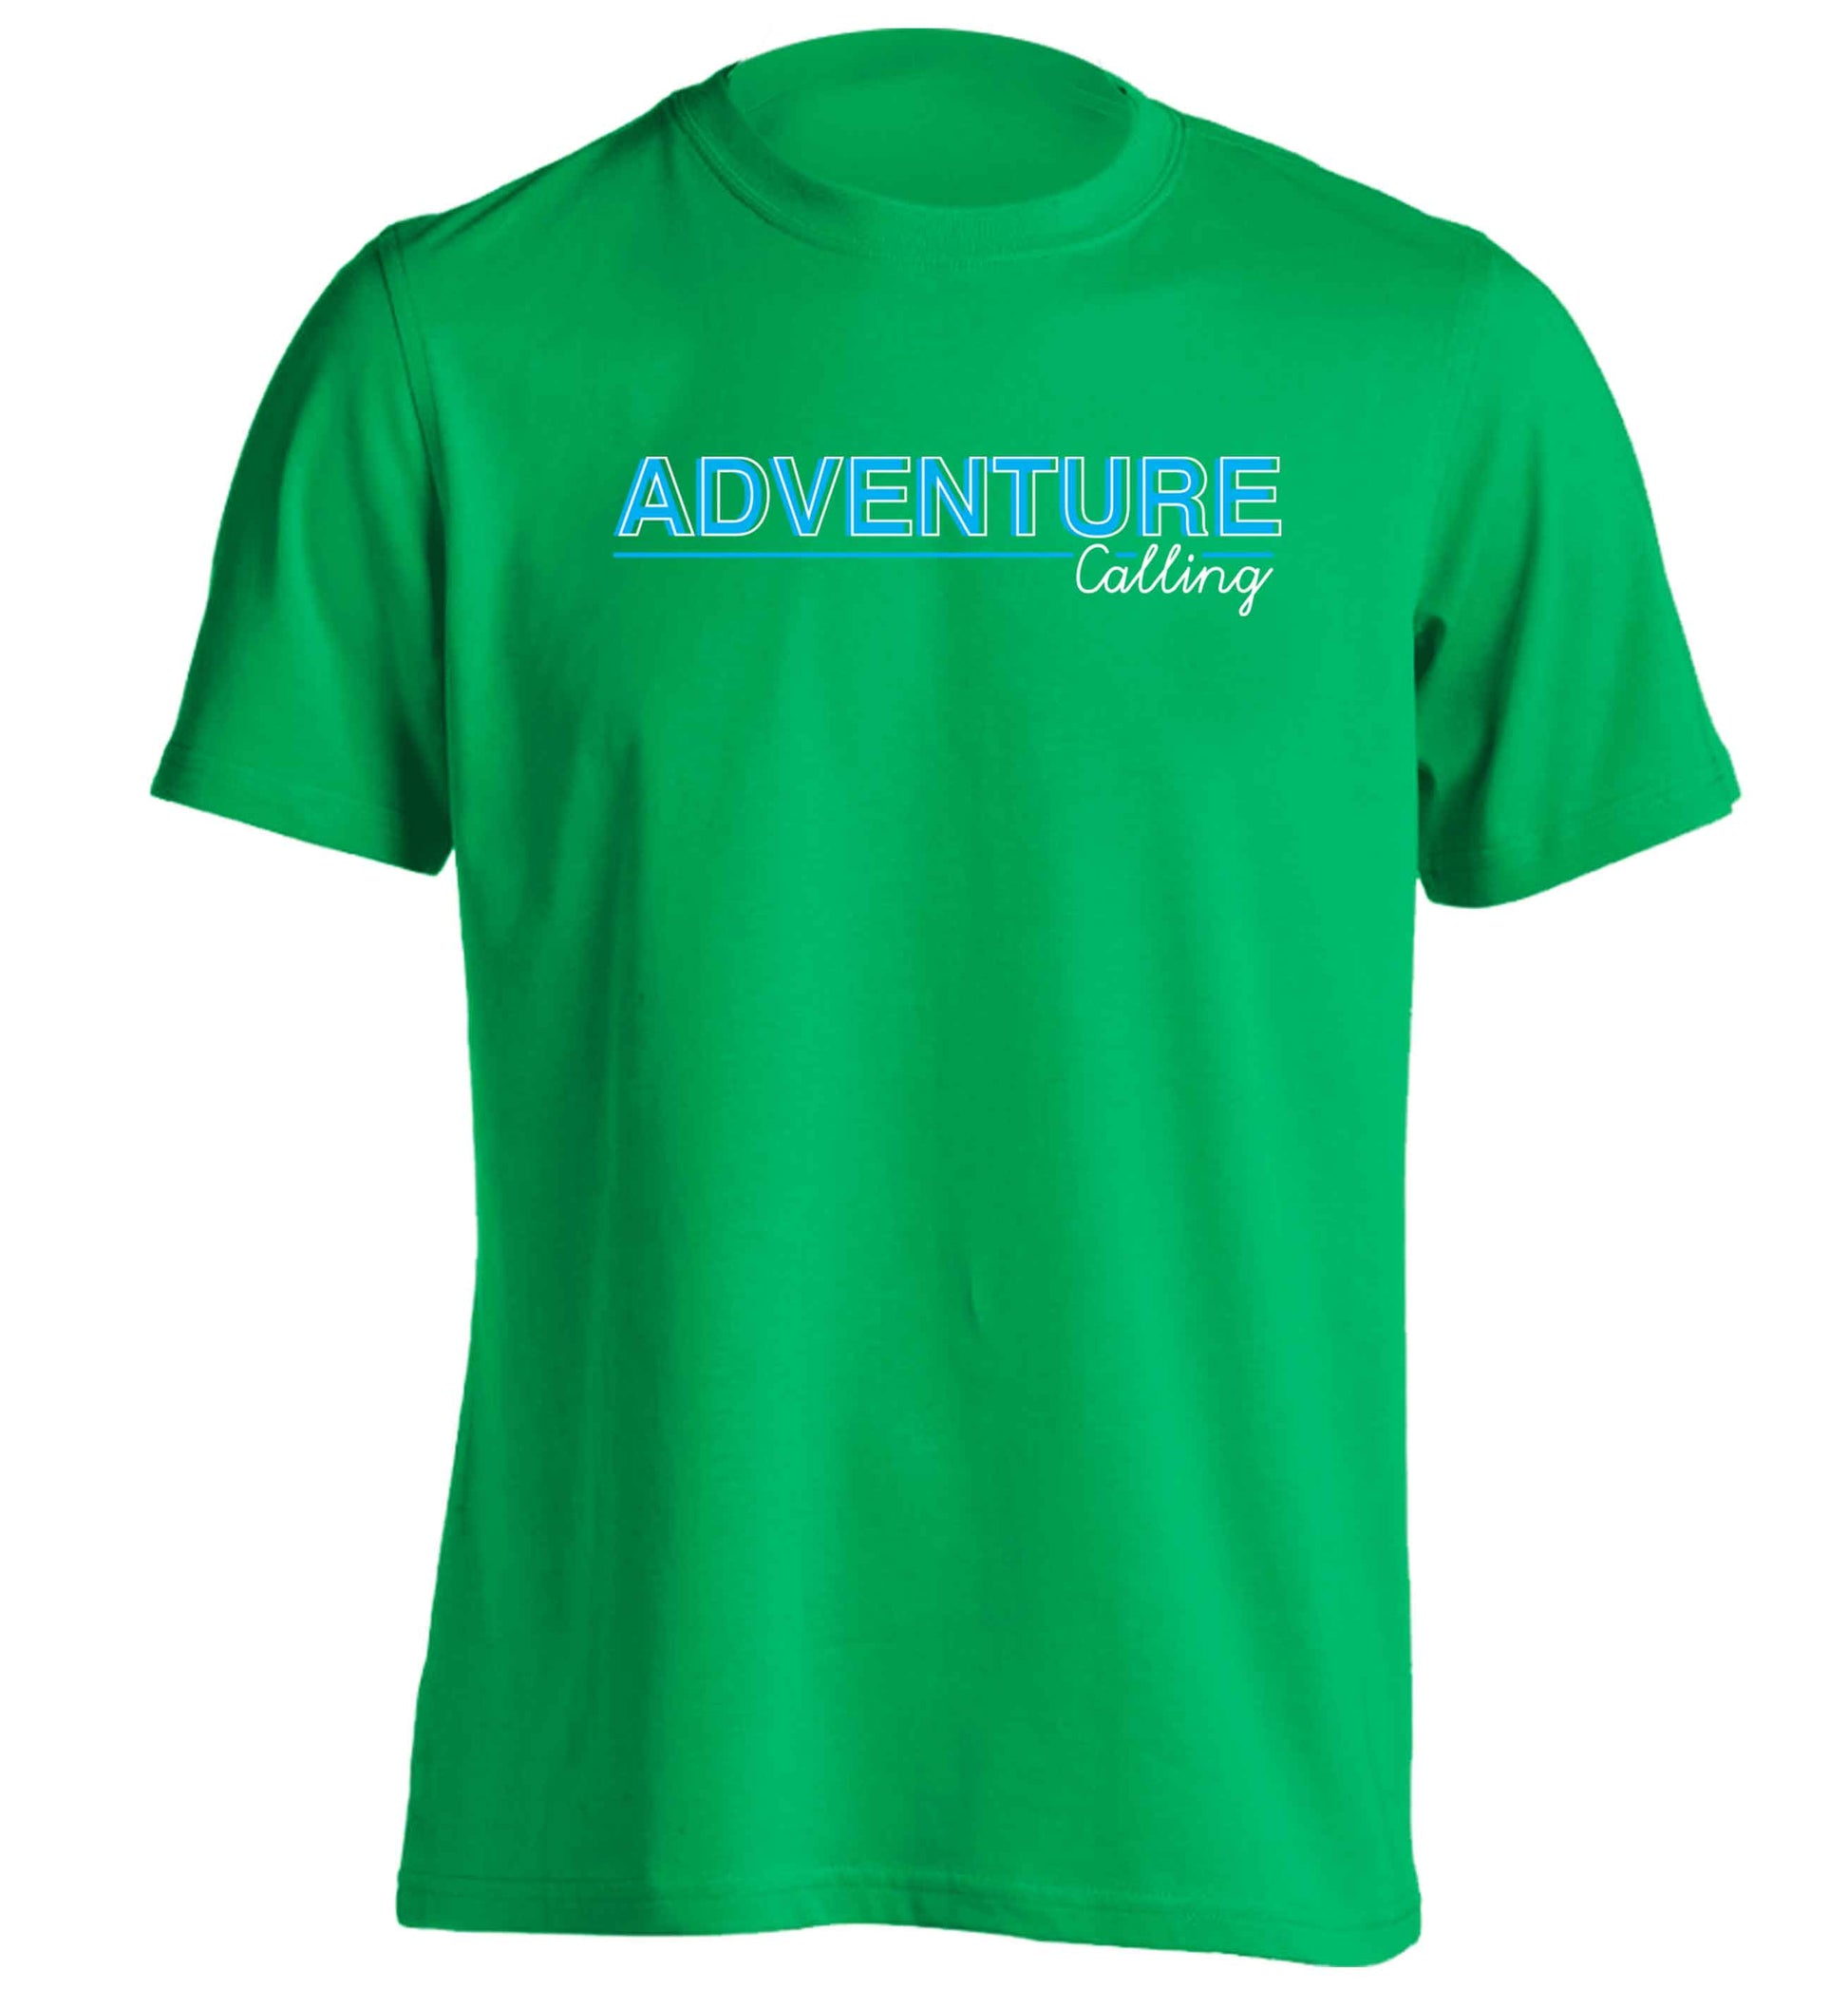 Adventure calling adults unisex green Tshirt 2XL